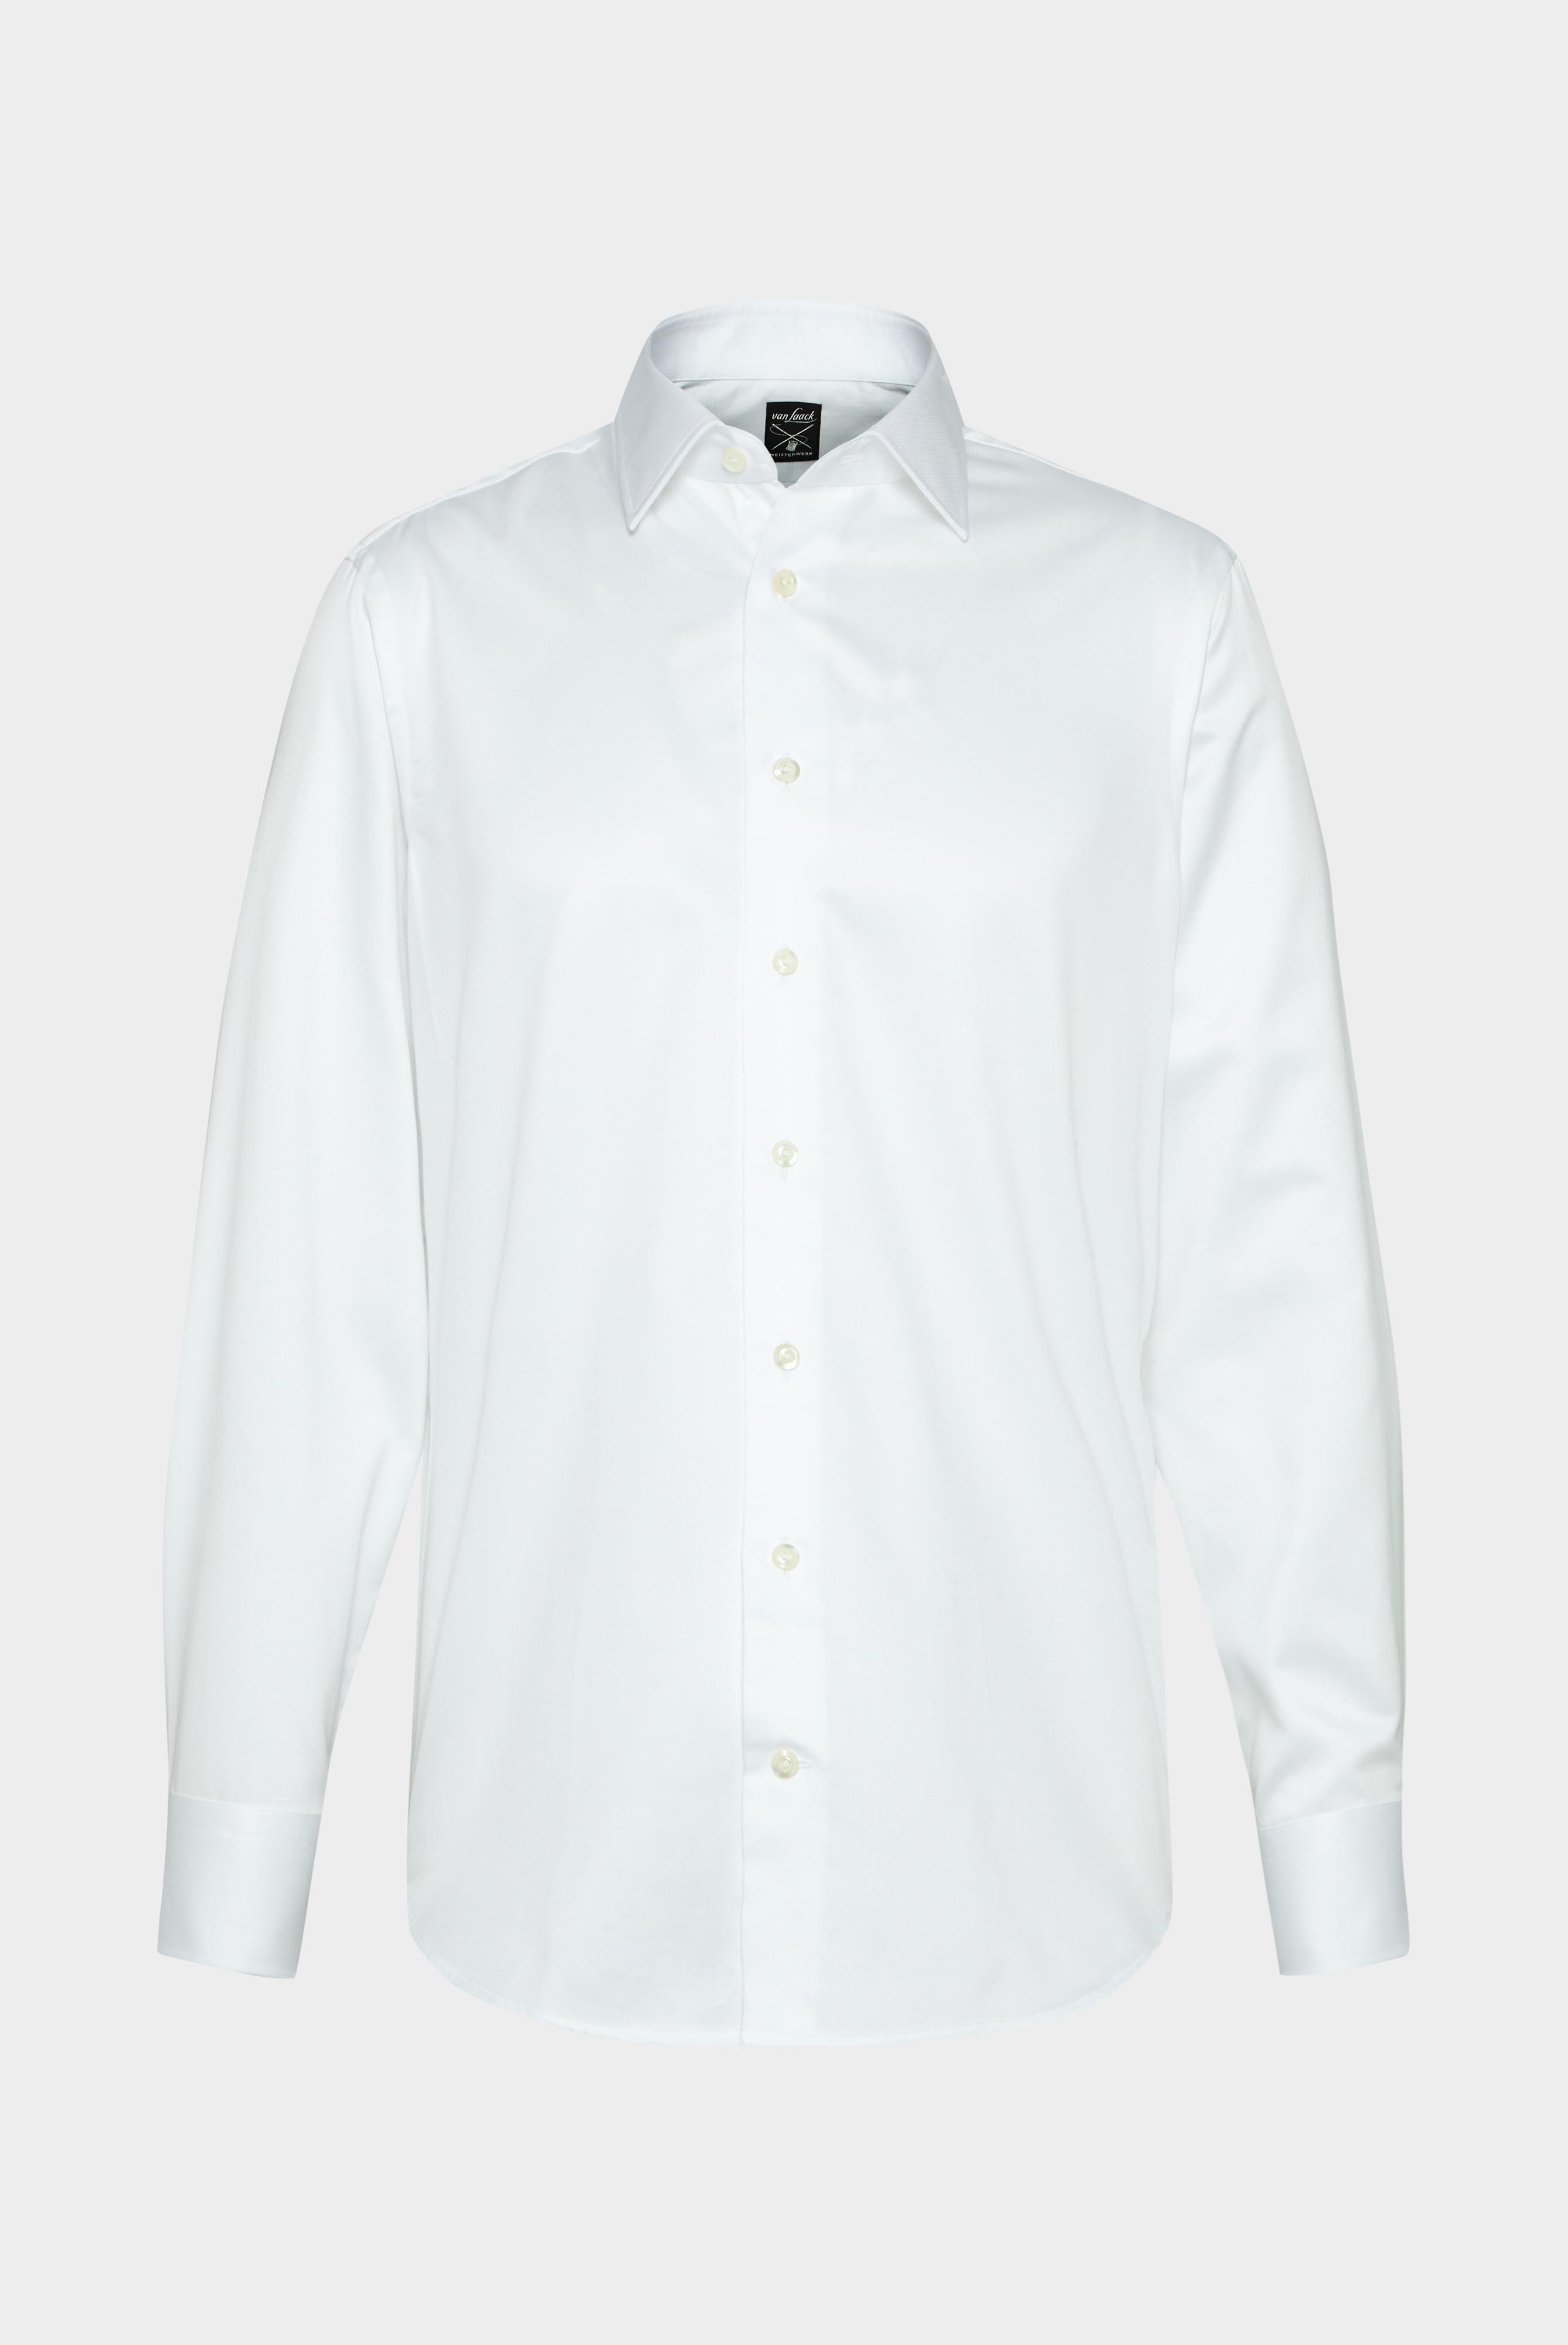 Business Shirts+Cotton Twill Shirt+20.2011.AV.130148.000.37